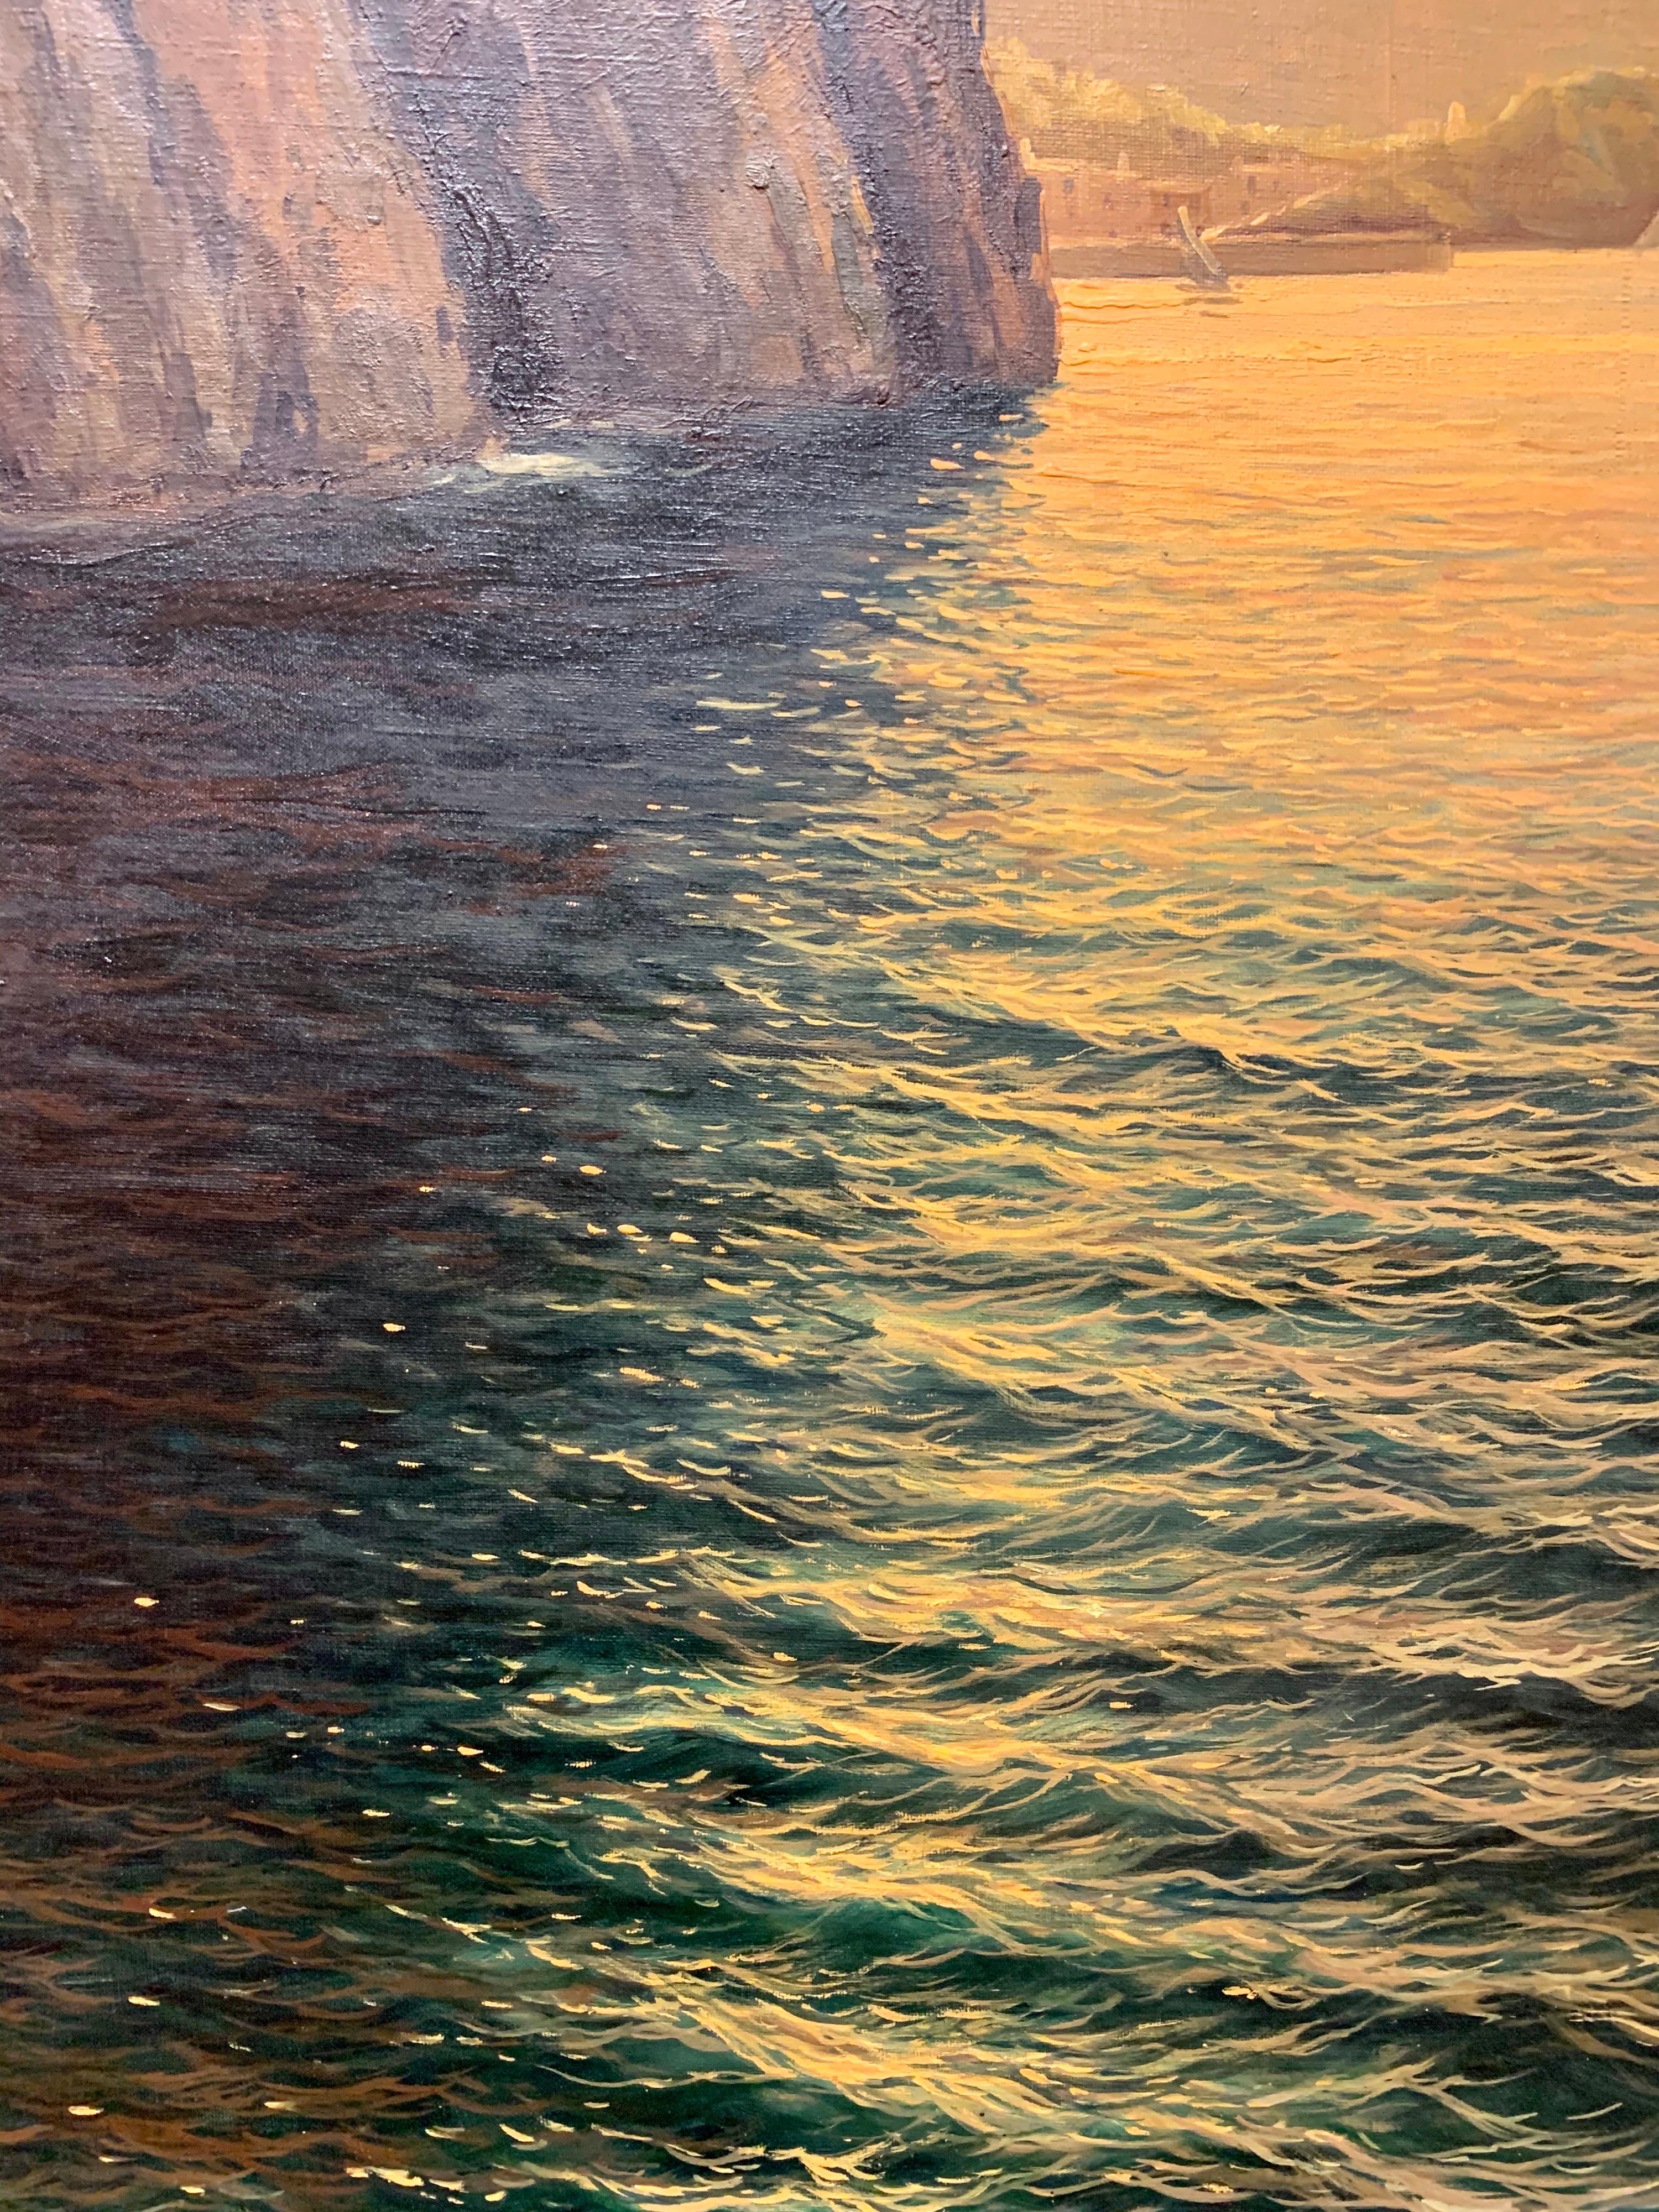 Italian Original Signed Guido Odierna “Capri” Oil on Canvas Seascape